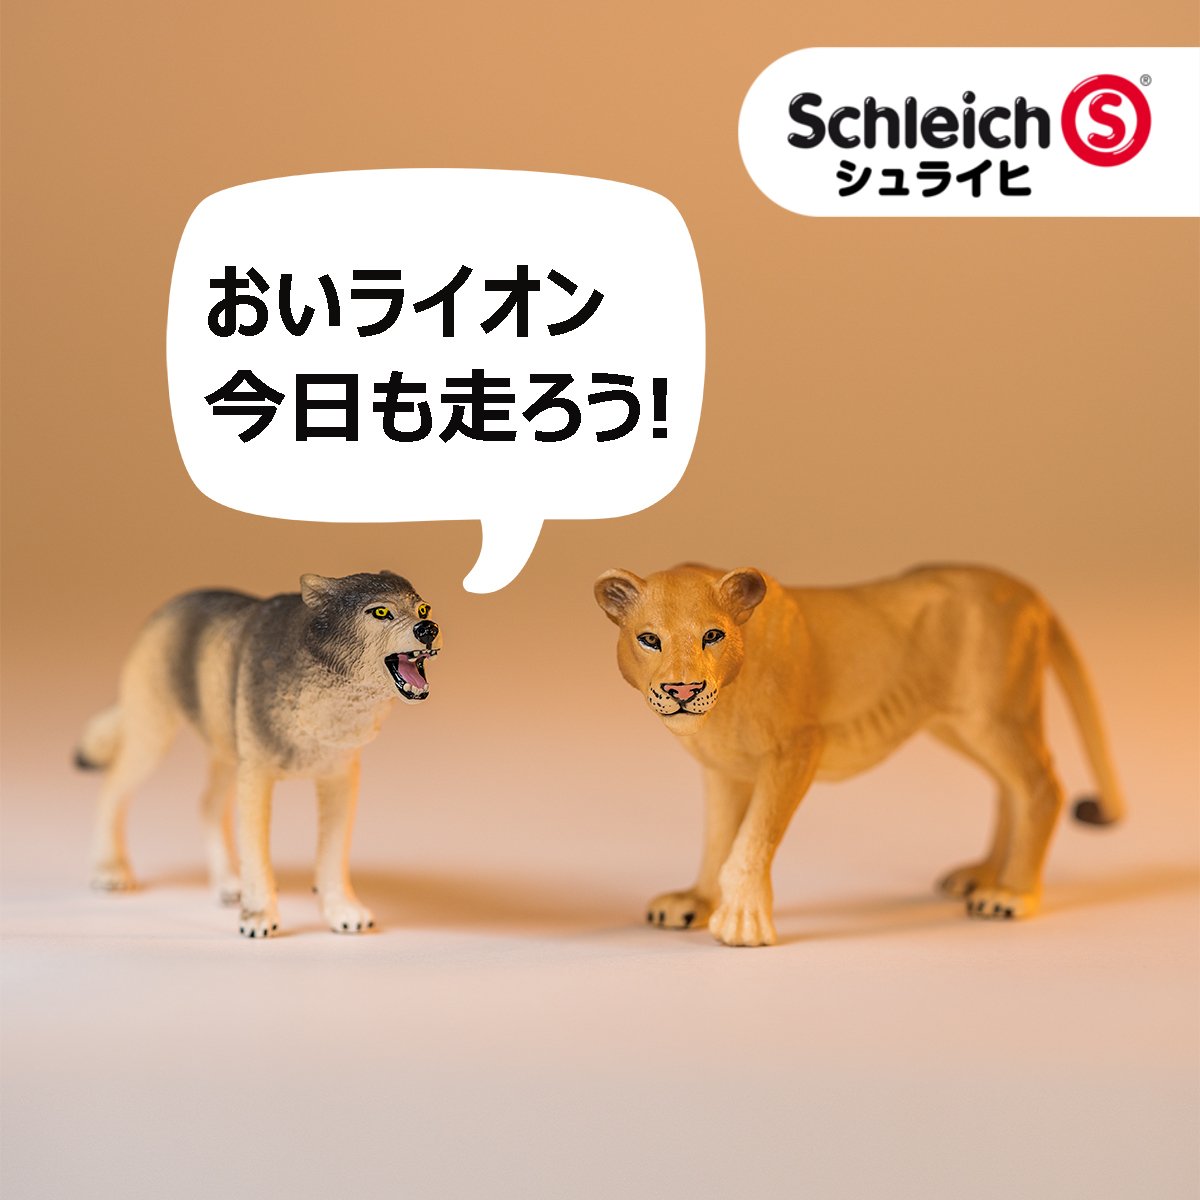 Schleich Japan K K En Twitter 今年こそ運動する と決めた方 順調ですか シュライヒの動物はバッチリ運動していますよ オオカミは時速約30kmで7時間以上も狩りができ 一方 ライオンのメスは 時速約60kmで狩りをします 継続は力なり 頑張りましょう